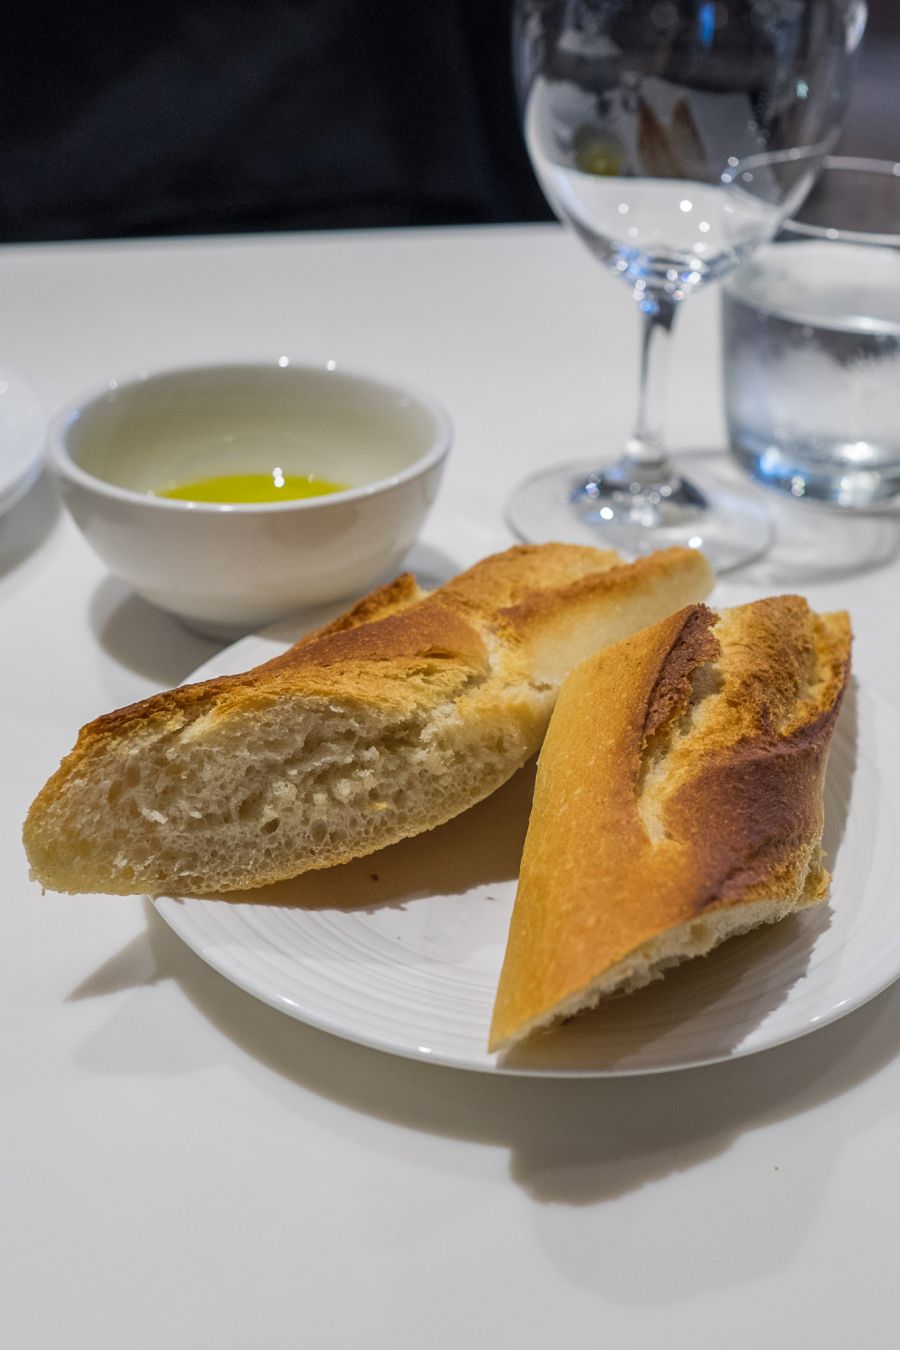 Baguette with olive oil (AU$2.50 per person)